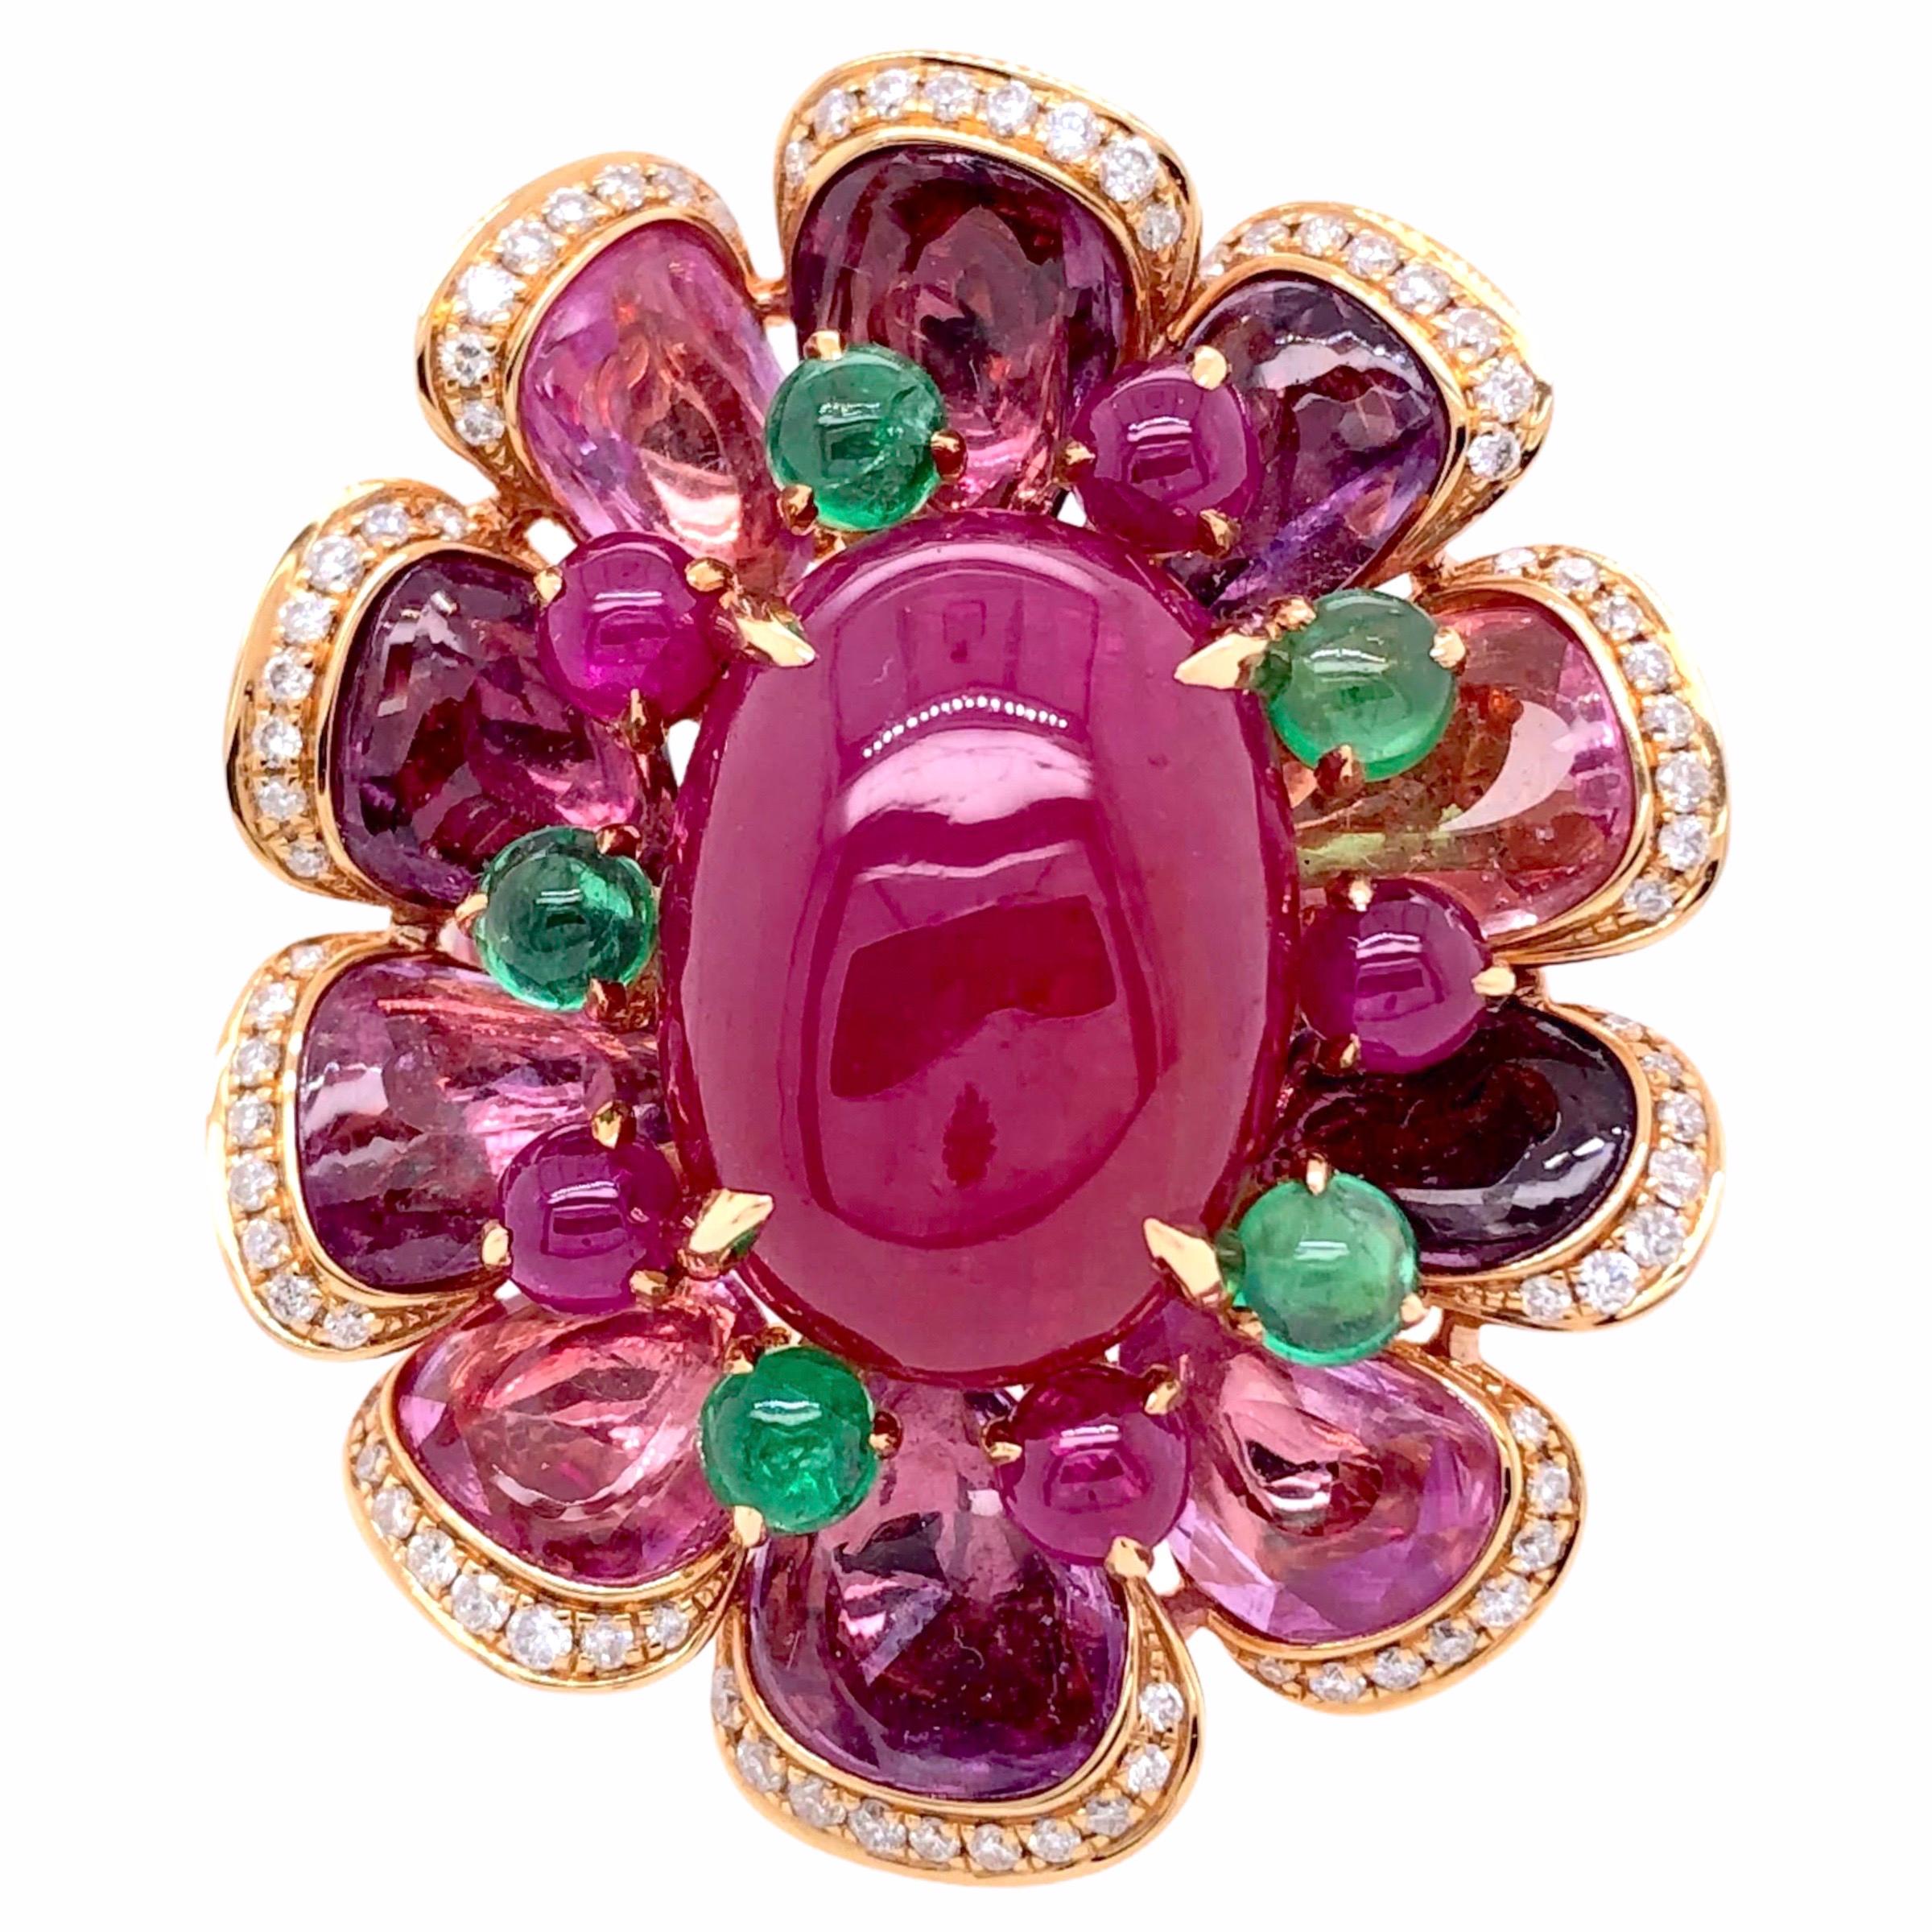 PARIS Craft House 13.51ct Cabochon Ruby Sapphire Emerald Diamond Flower Ring in 18 Karat Rose Gold.

- 1 Cabochon Ruby/13.51ct
- 33 Fancy Sapphires/12.07ct
- 5 Cabochon Emeralds/0.98ct
- 8 Green Garnets/0.15ct
- 93 Round Diamonds/0.44ct
- 18K Rose